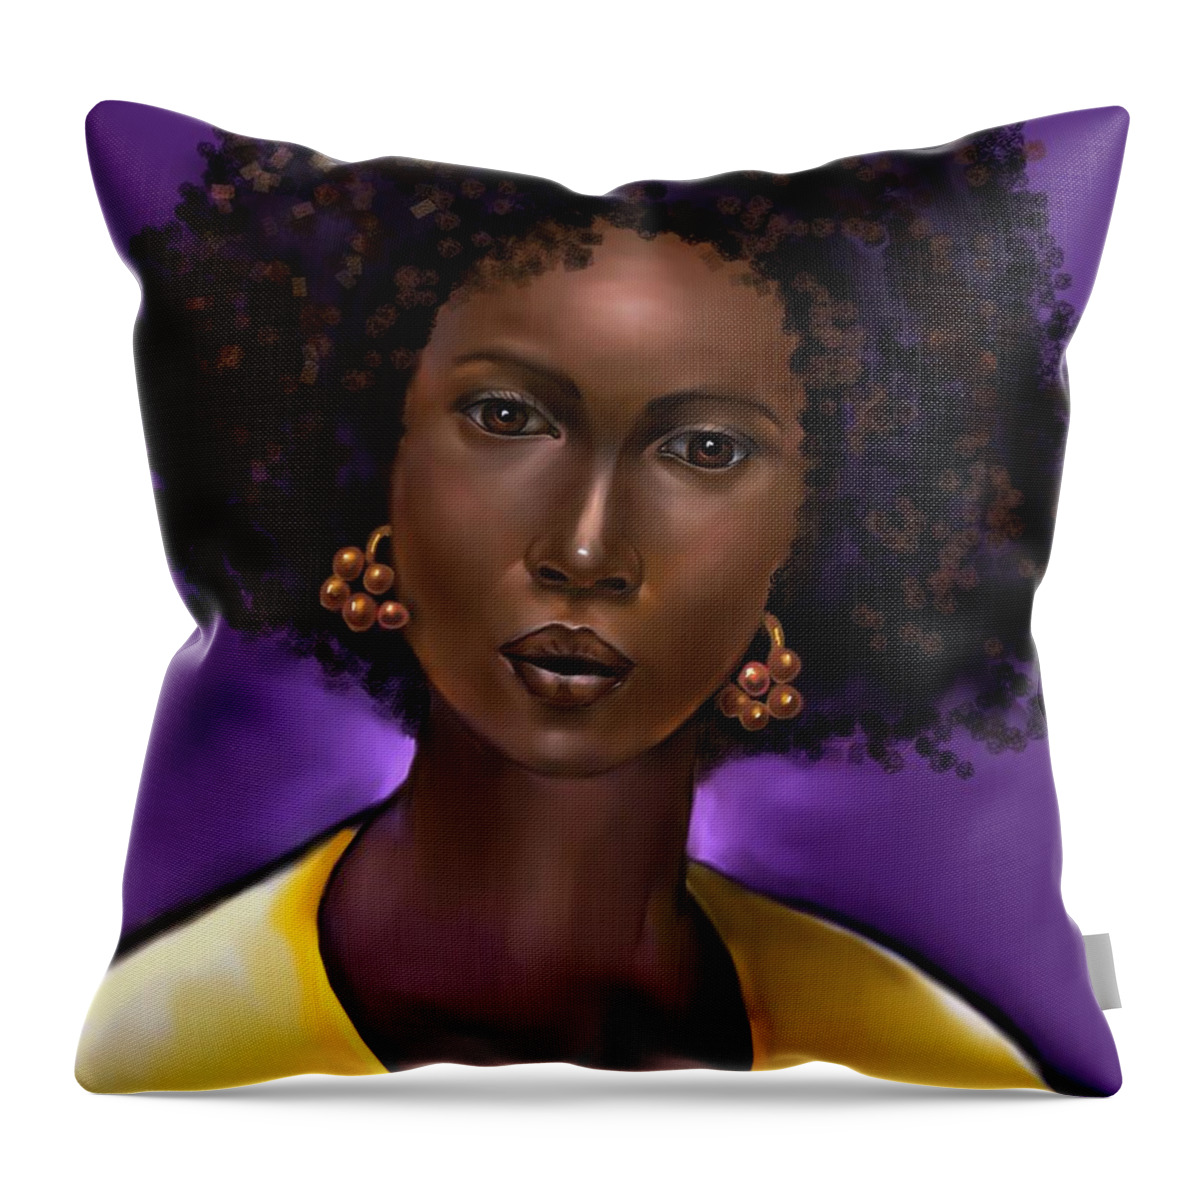 Woman Throw Pillow featuring the digital art Sisterhood Collection by Carmen Cordova